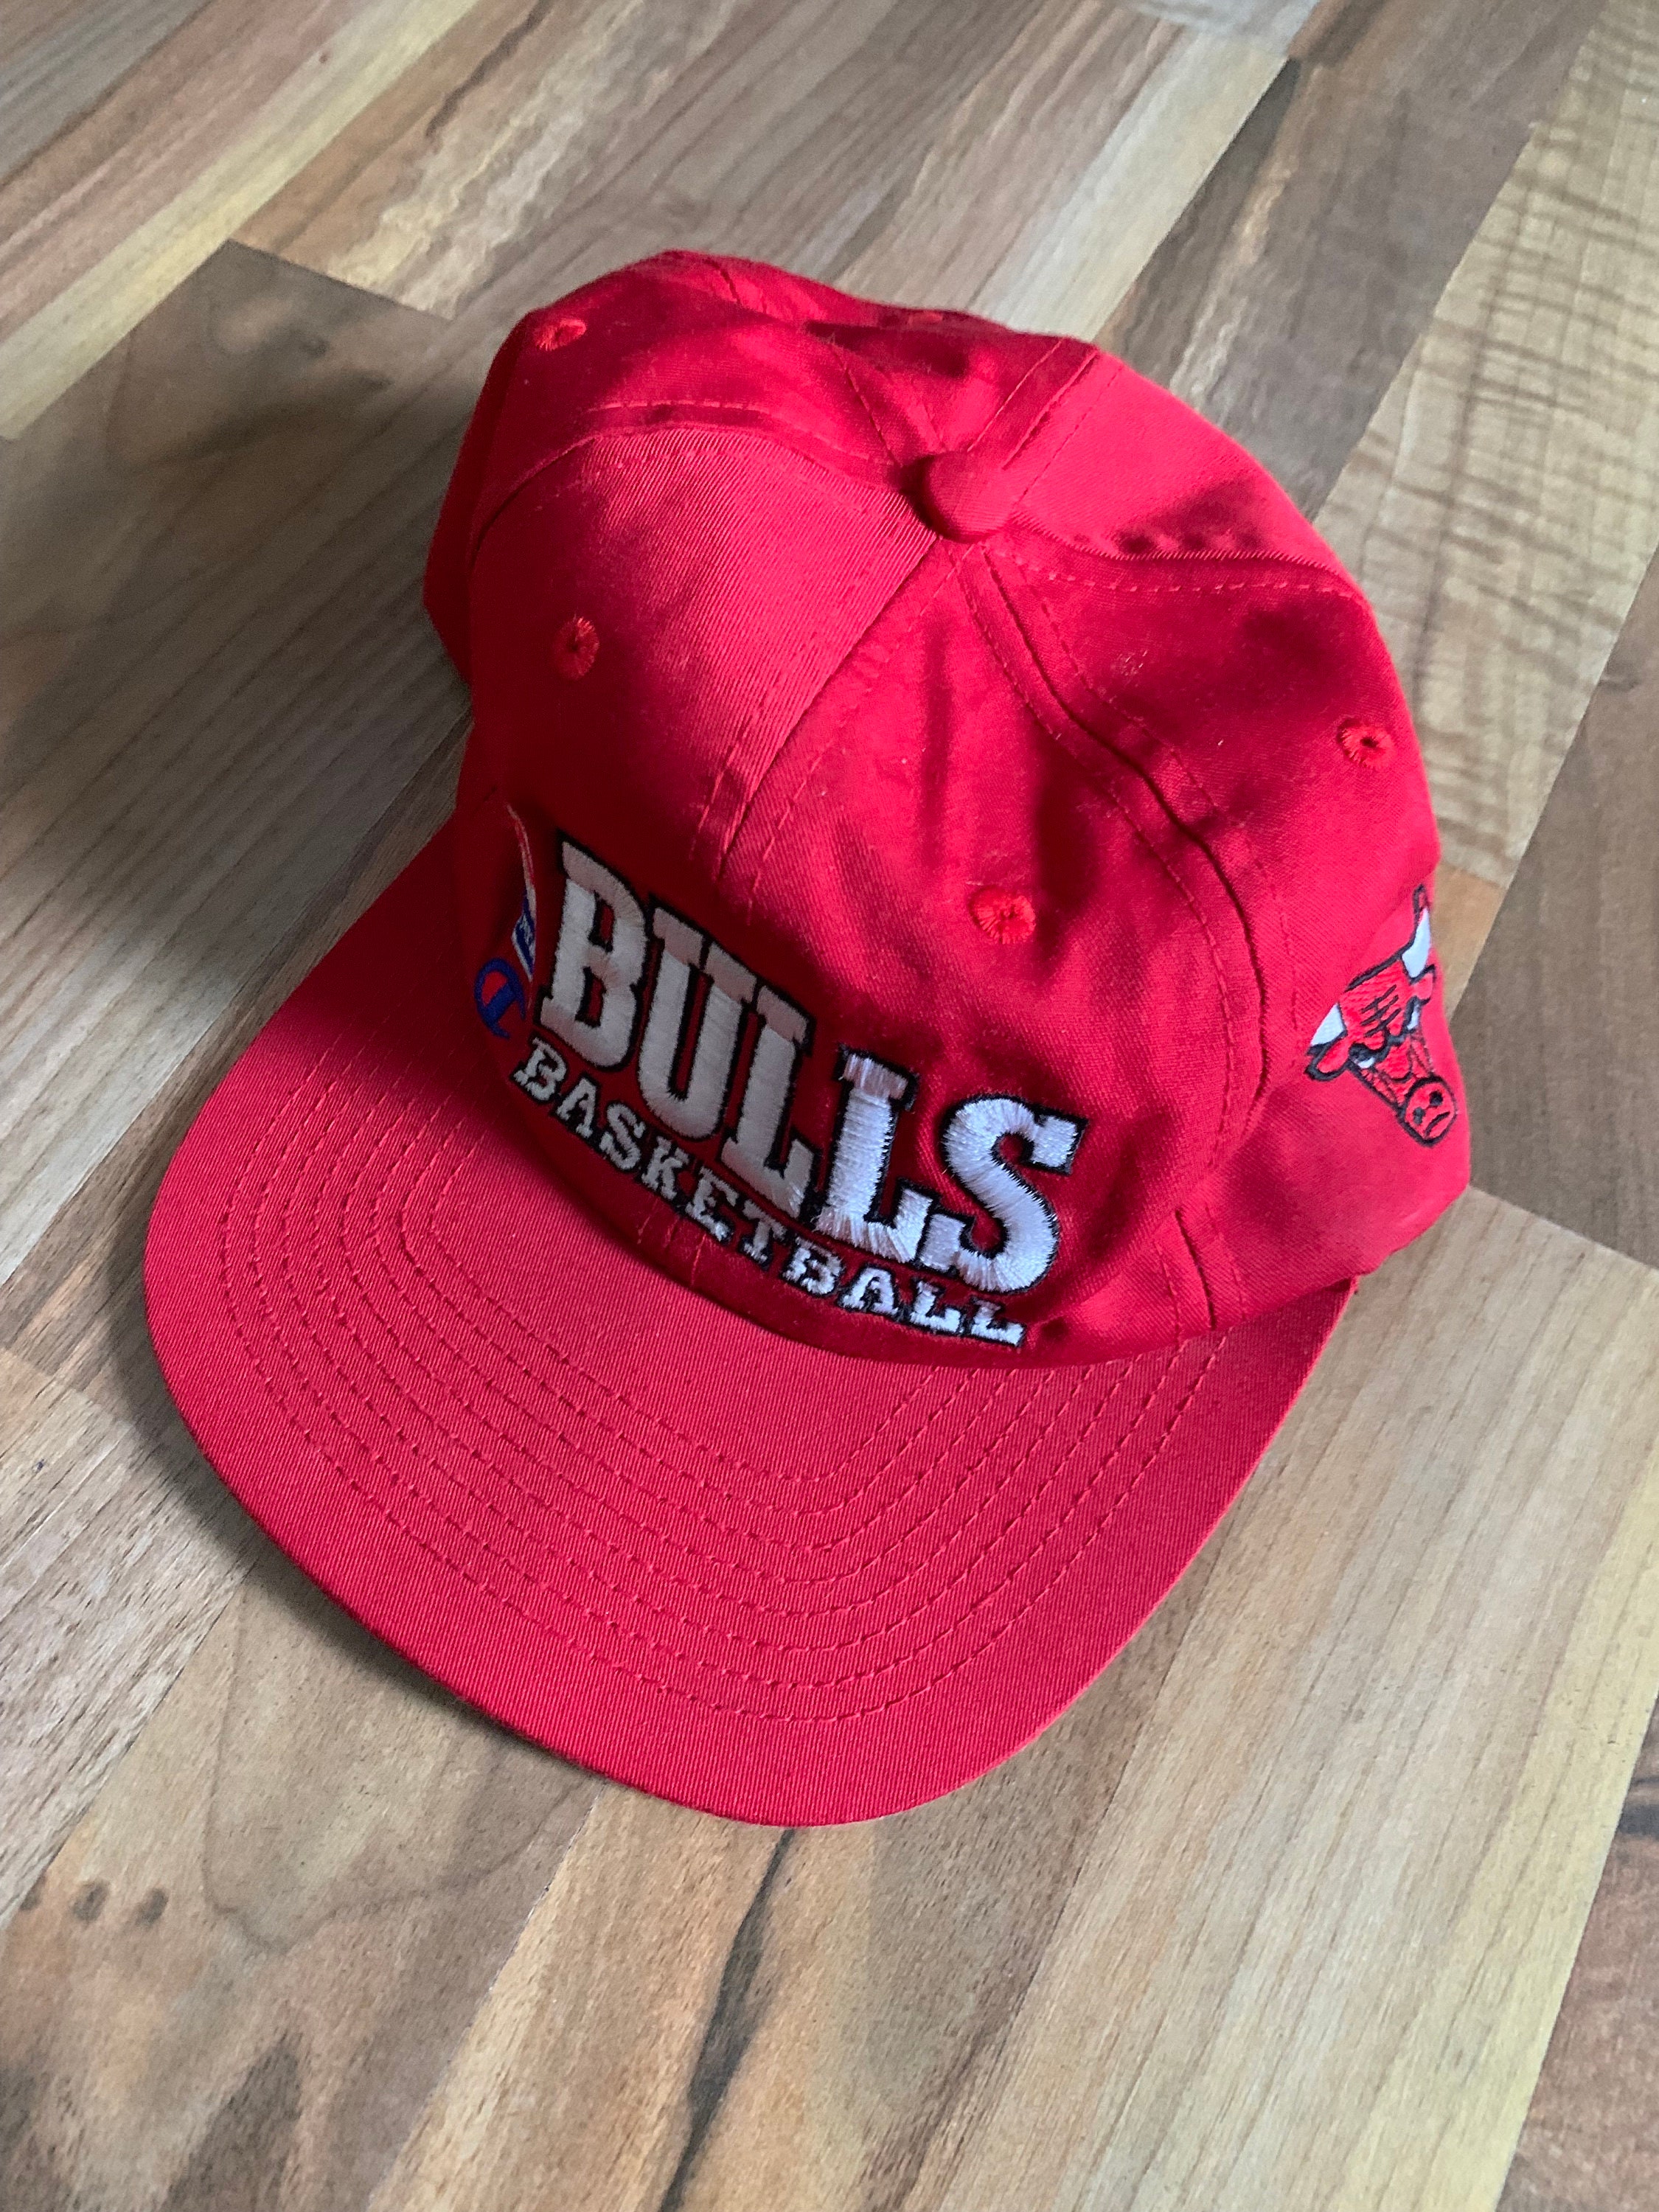 Chicago Bulls: Scottie Pippen 1995/96 Red Champion Jersey (M) – National  Vintage League Ltd.